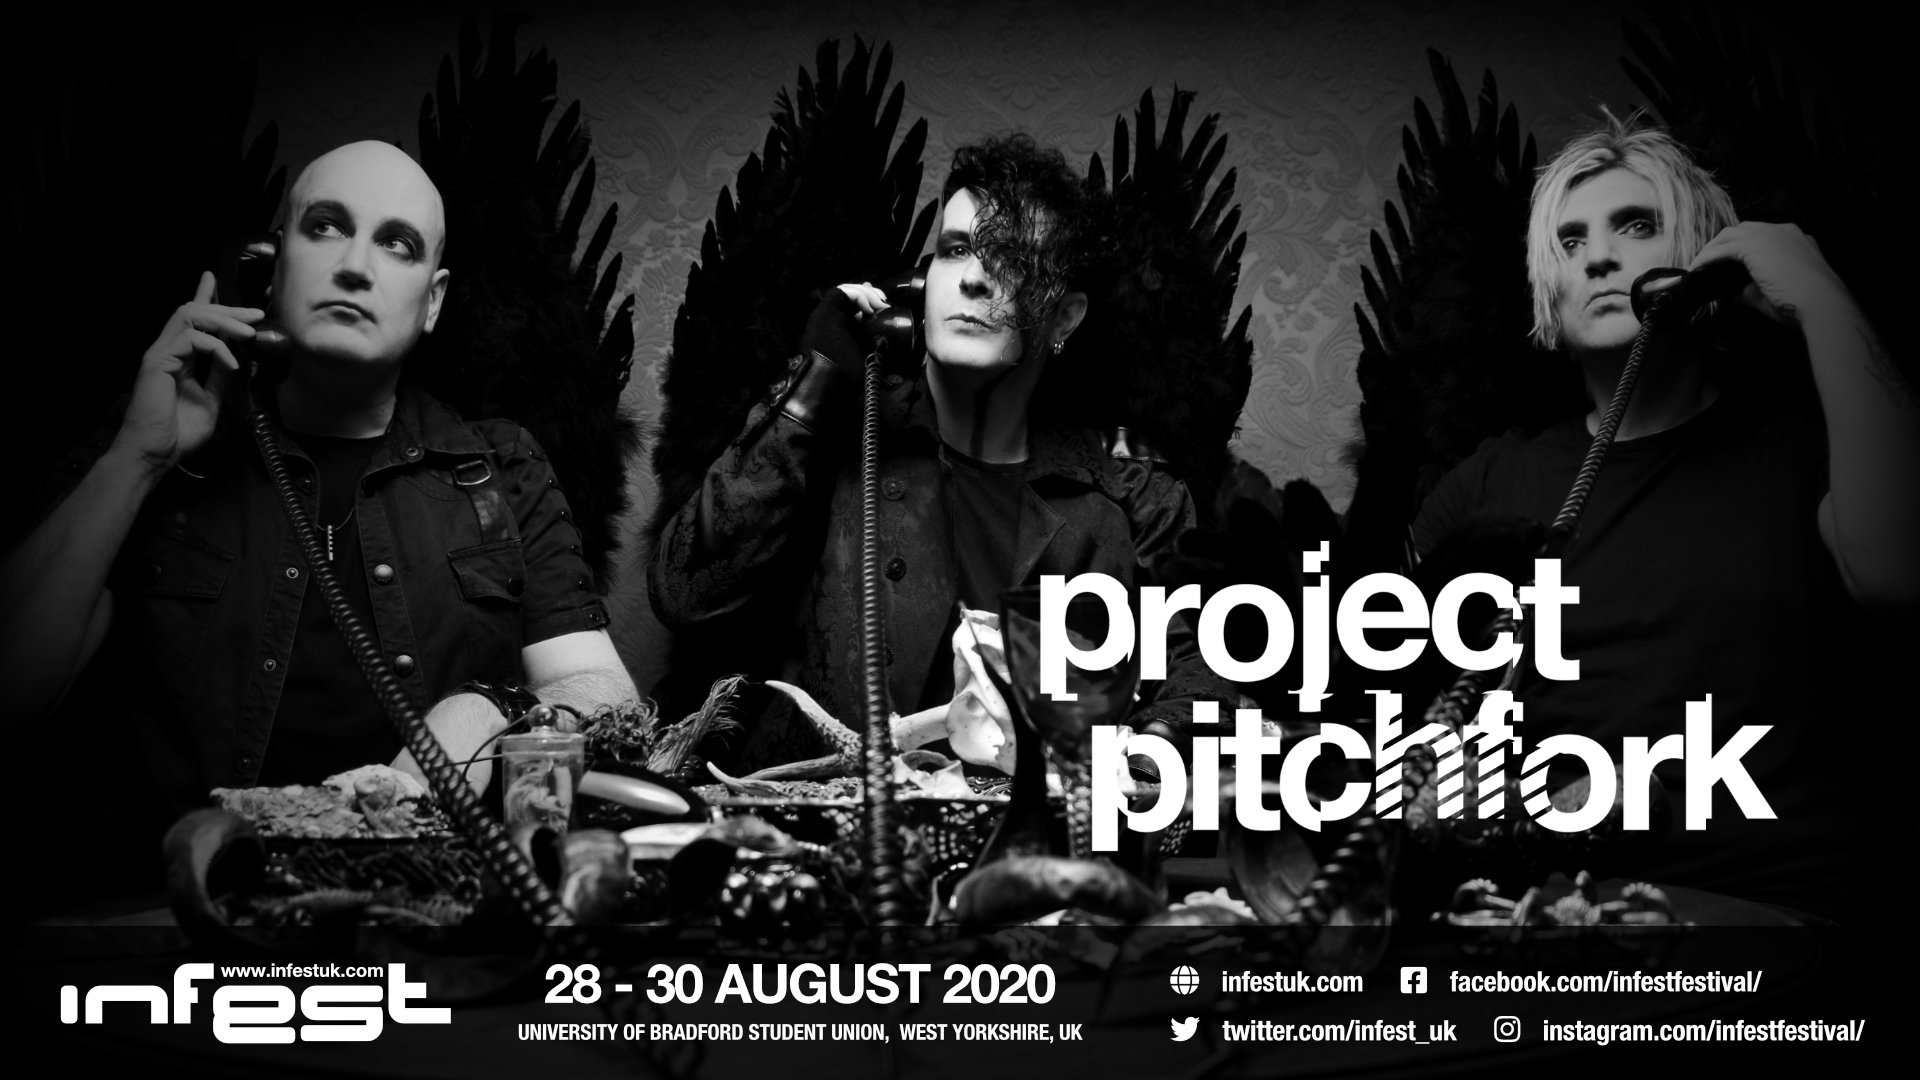 Infest 2020 PROJECT PITCHFORK confirmed! Infest Festival